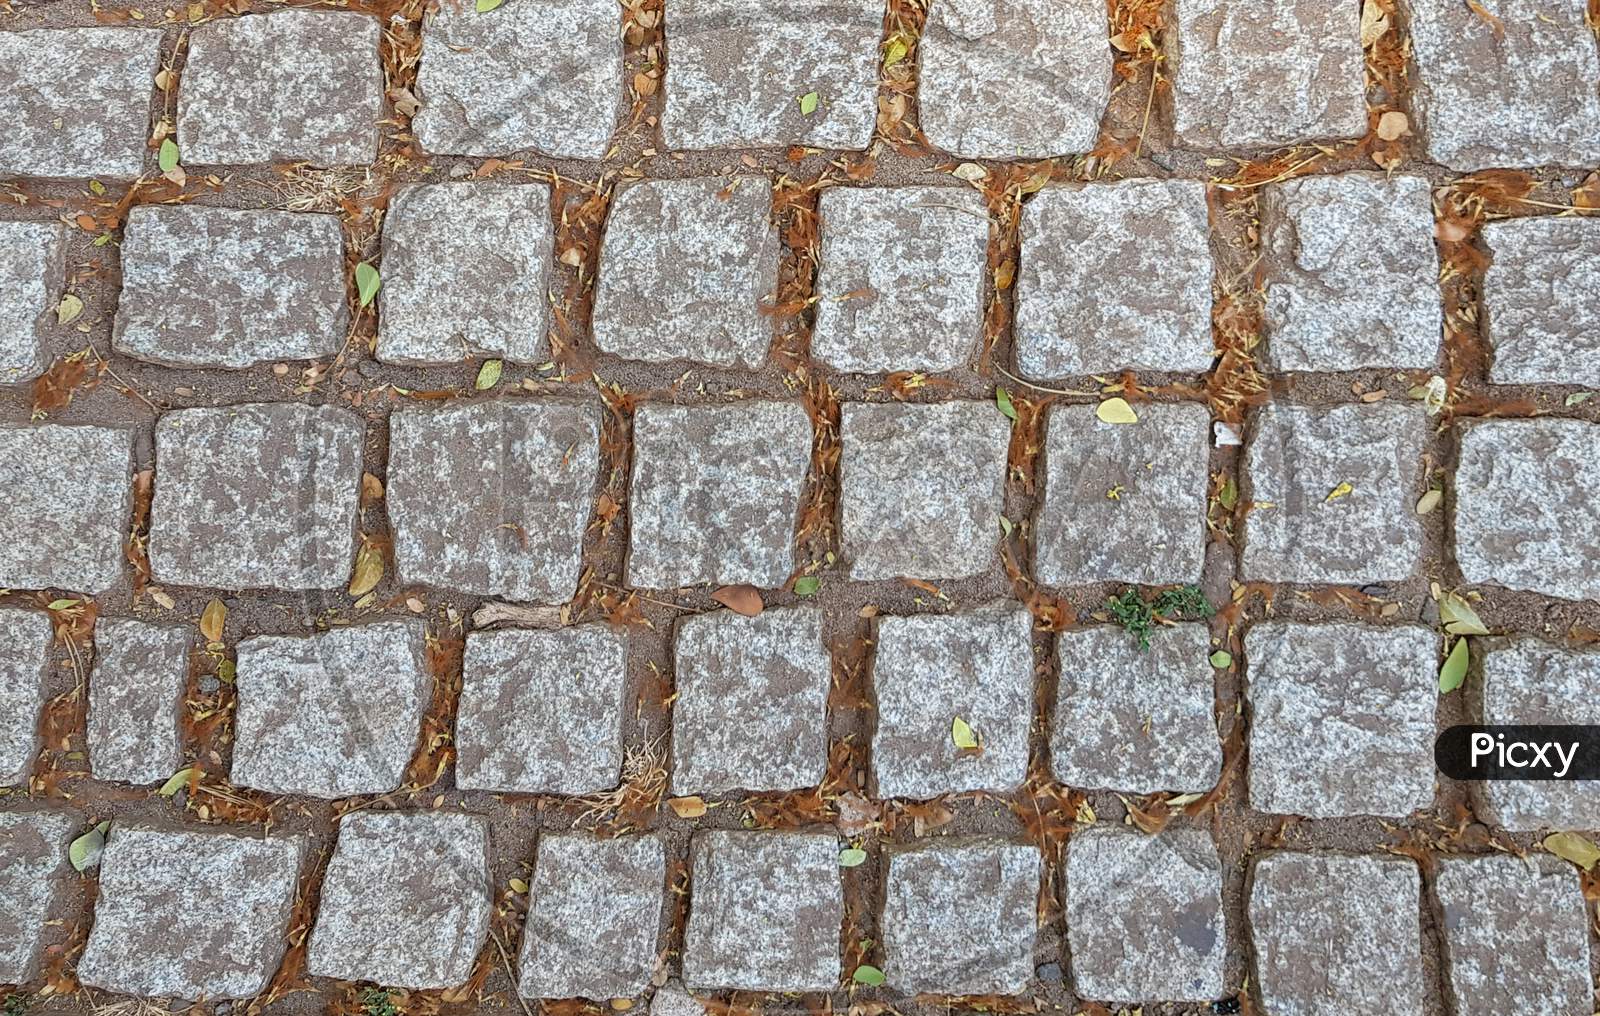 Brick Pattern Concrete Wall Stone Texture Background.